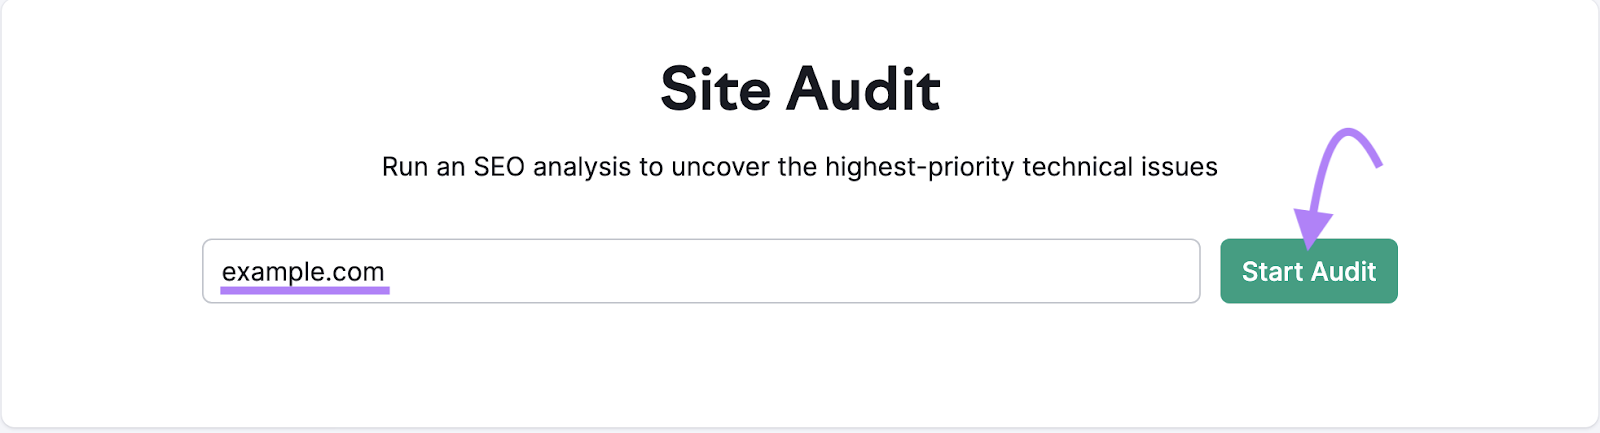 Site Audit search